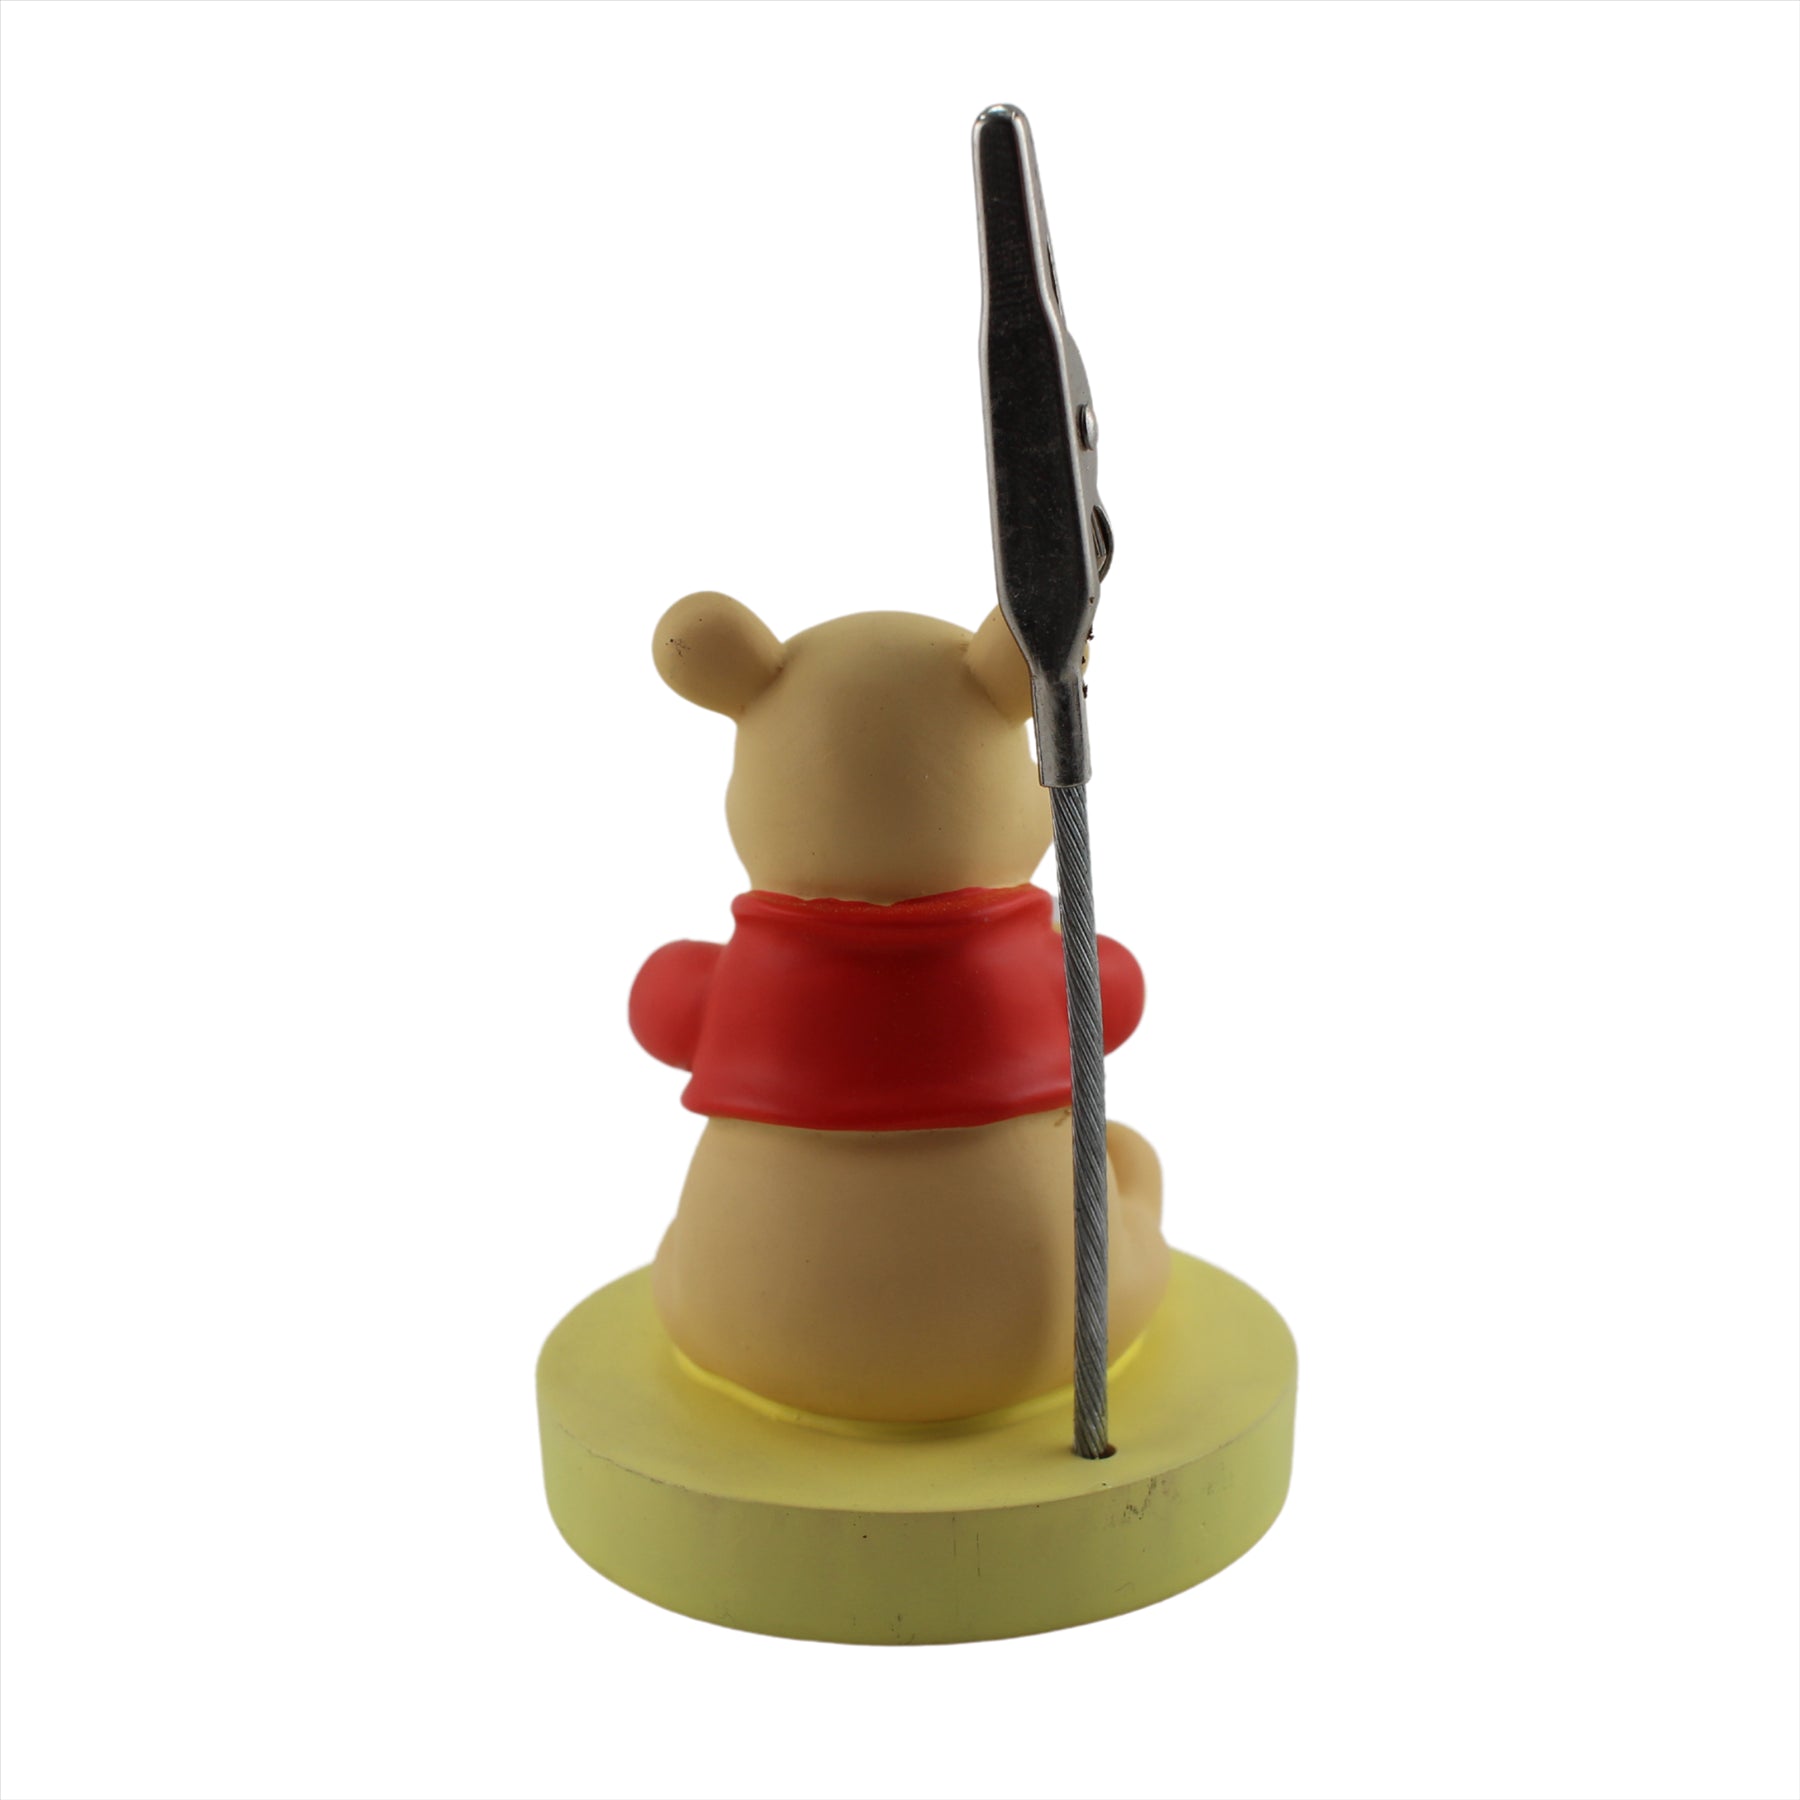 Winnie the Pooh Yummy Honey Photo Holder Clip 9cm - Toptoys2u